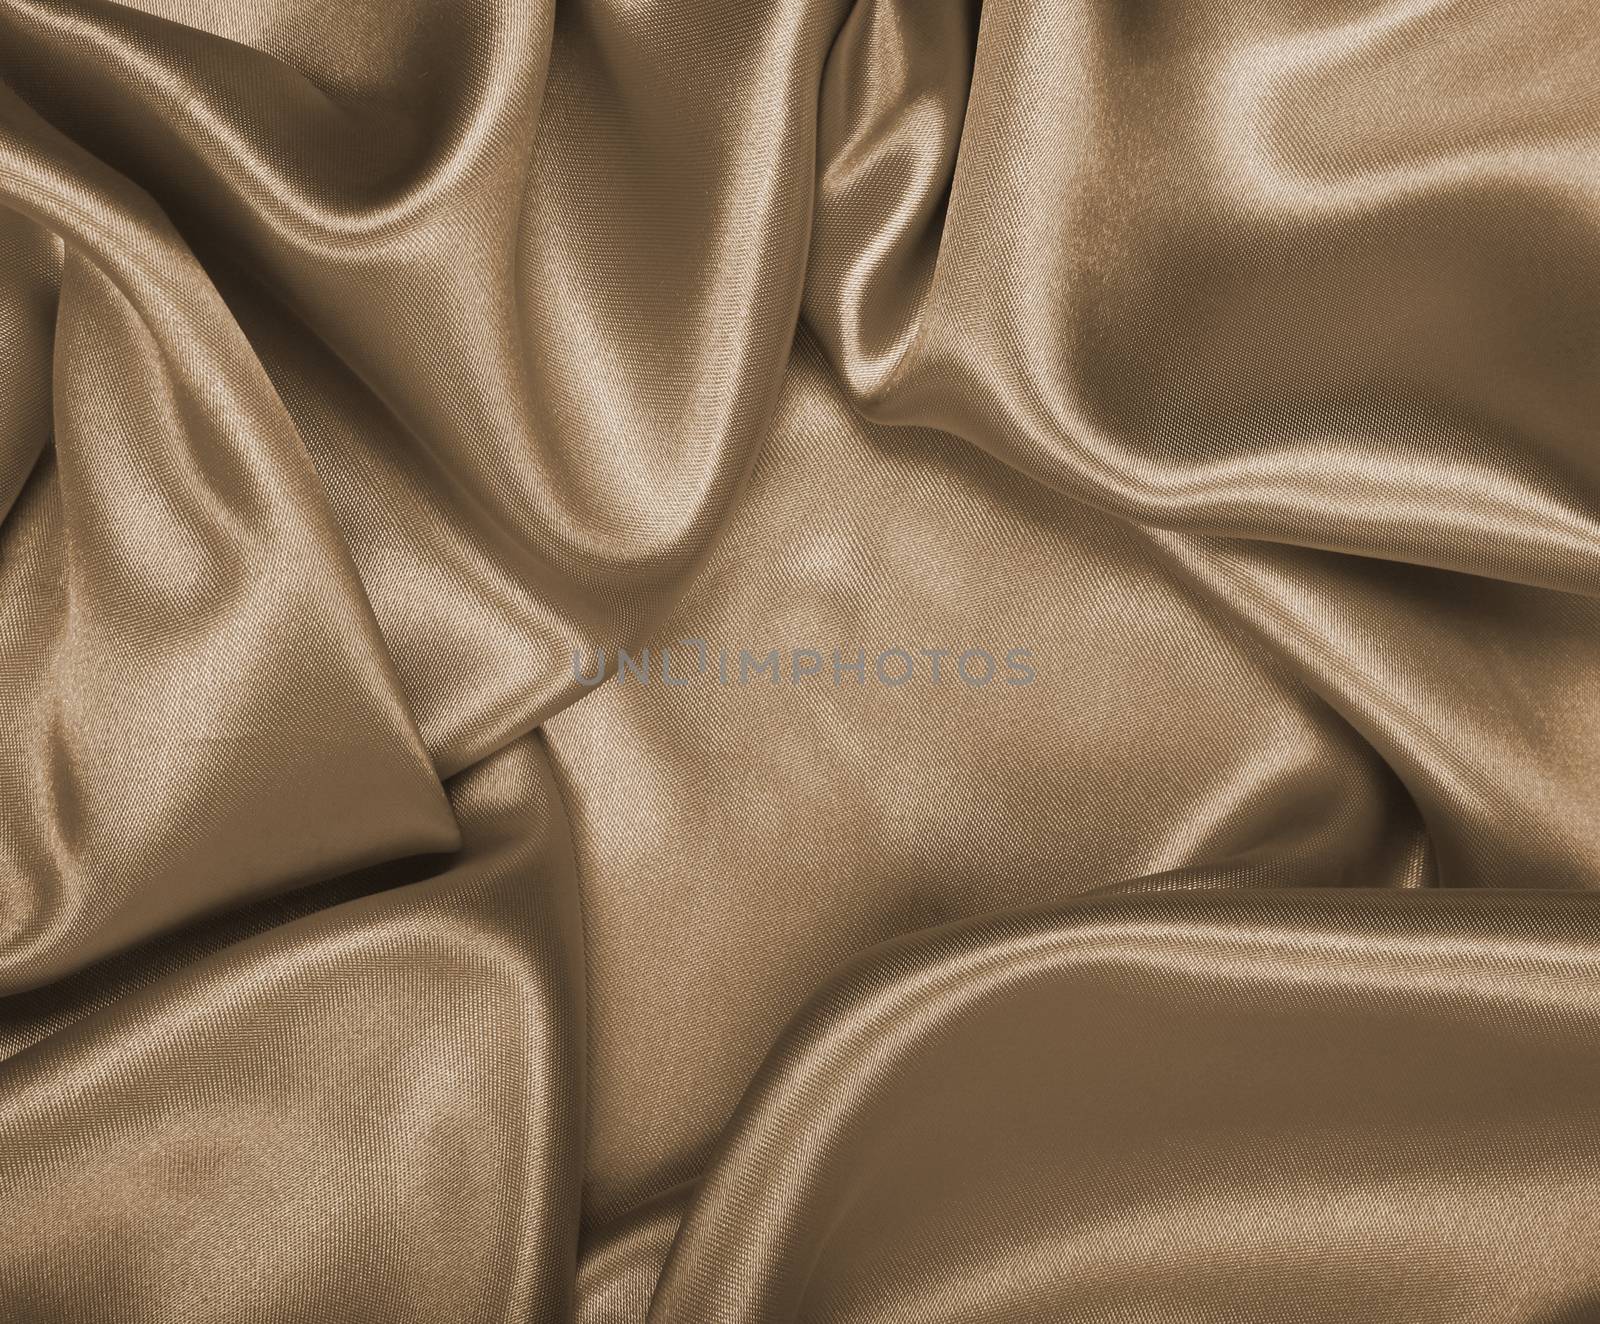 Smooth elegant golden silk or satin as wedding background. In Se by oxanatravel